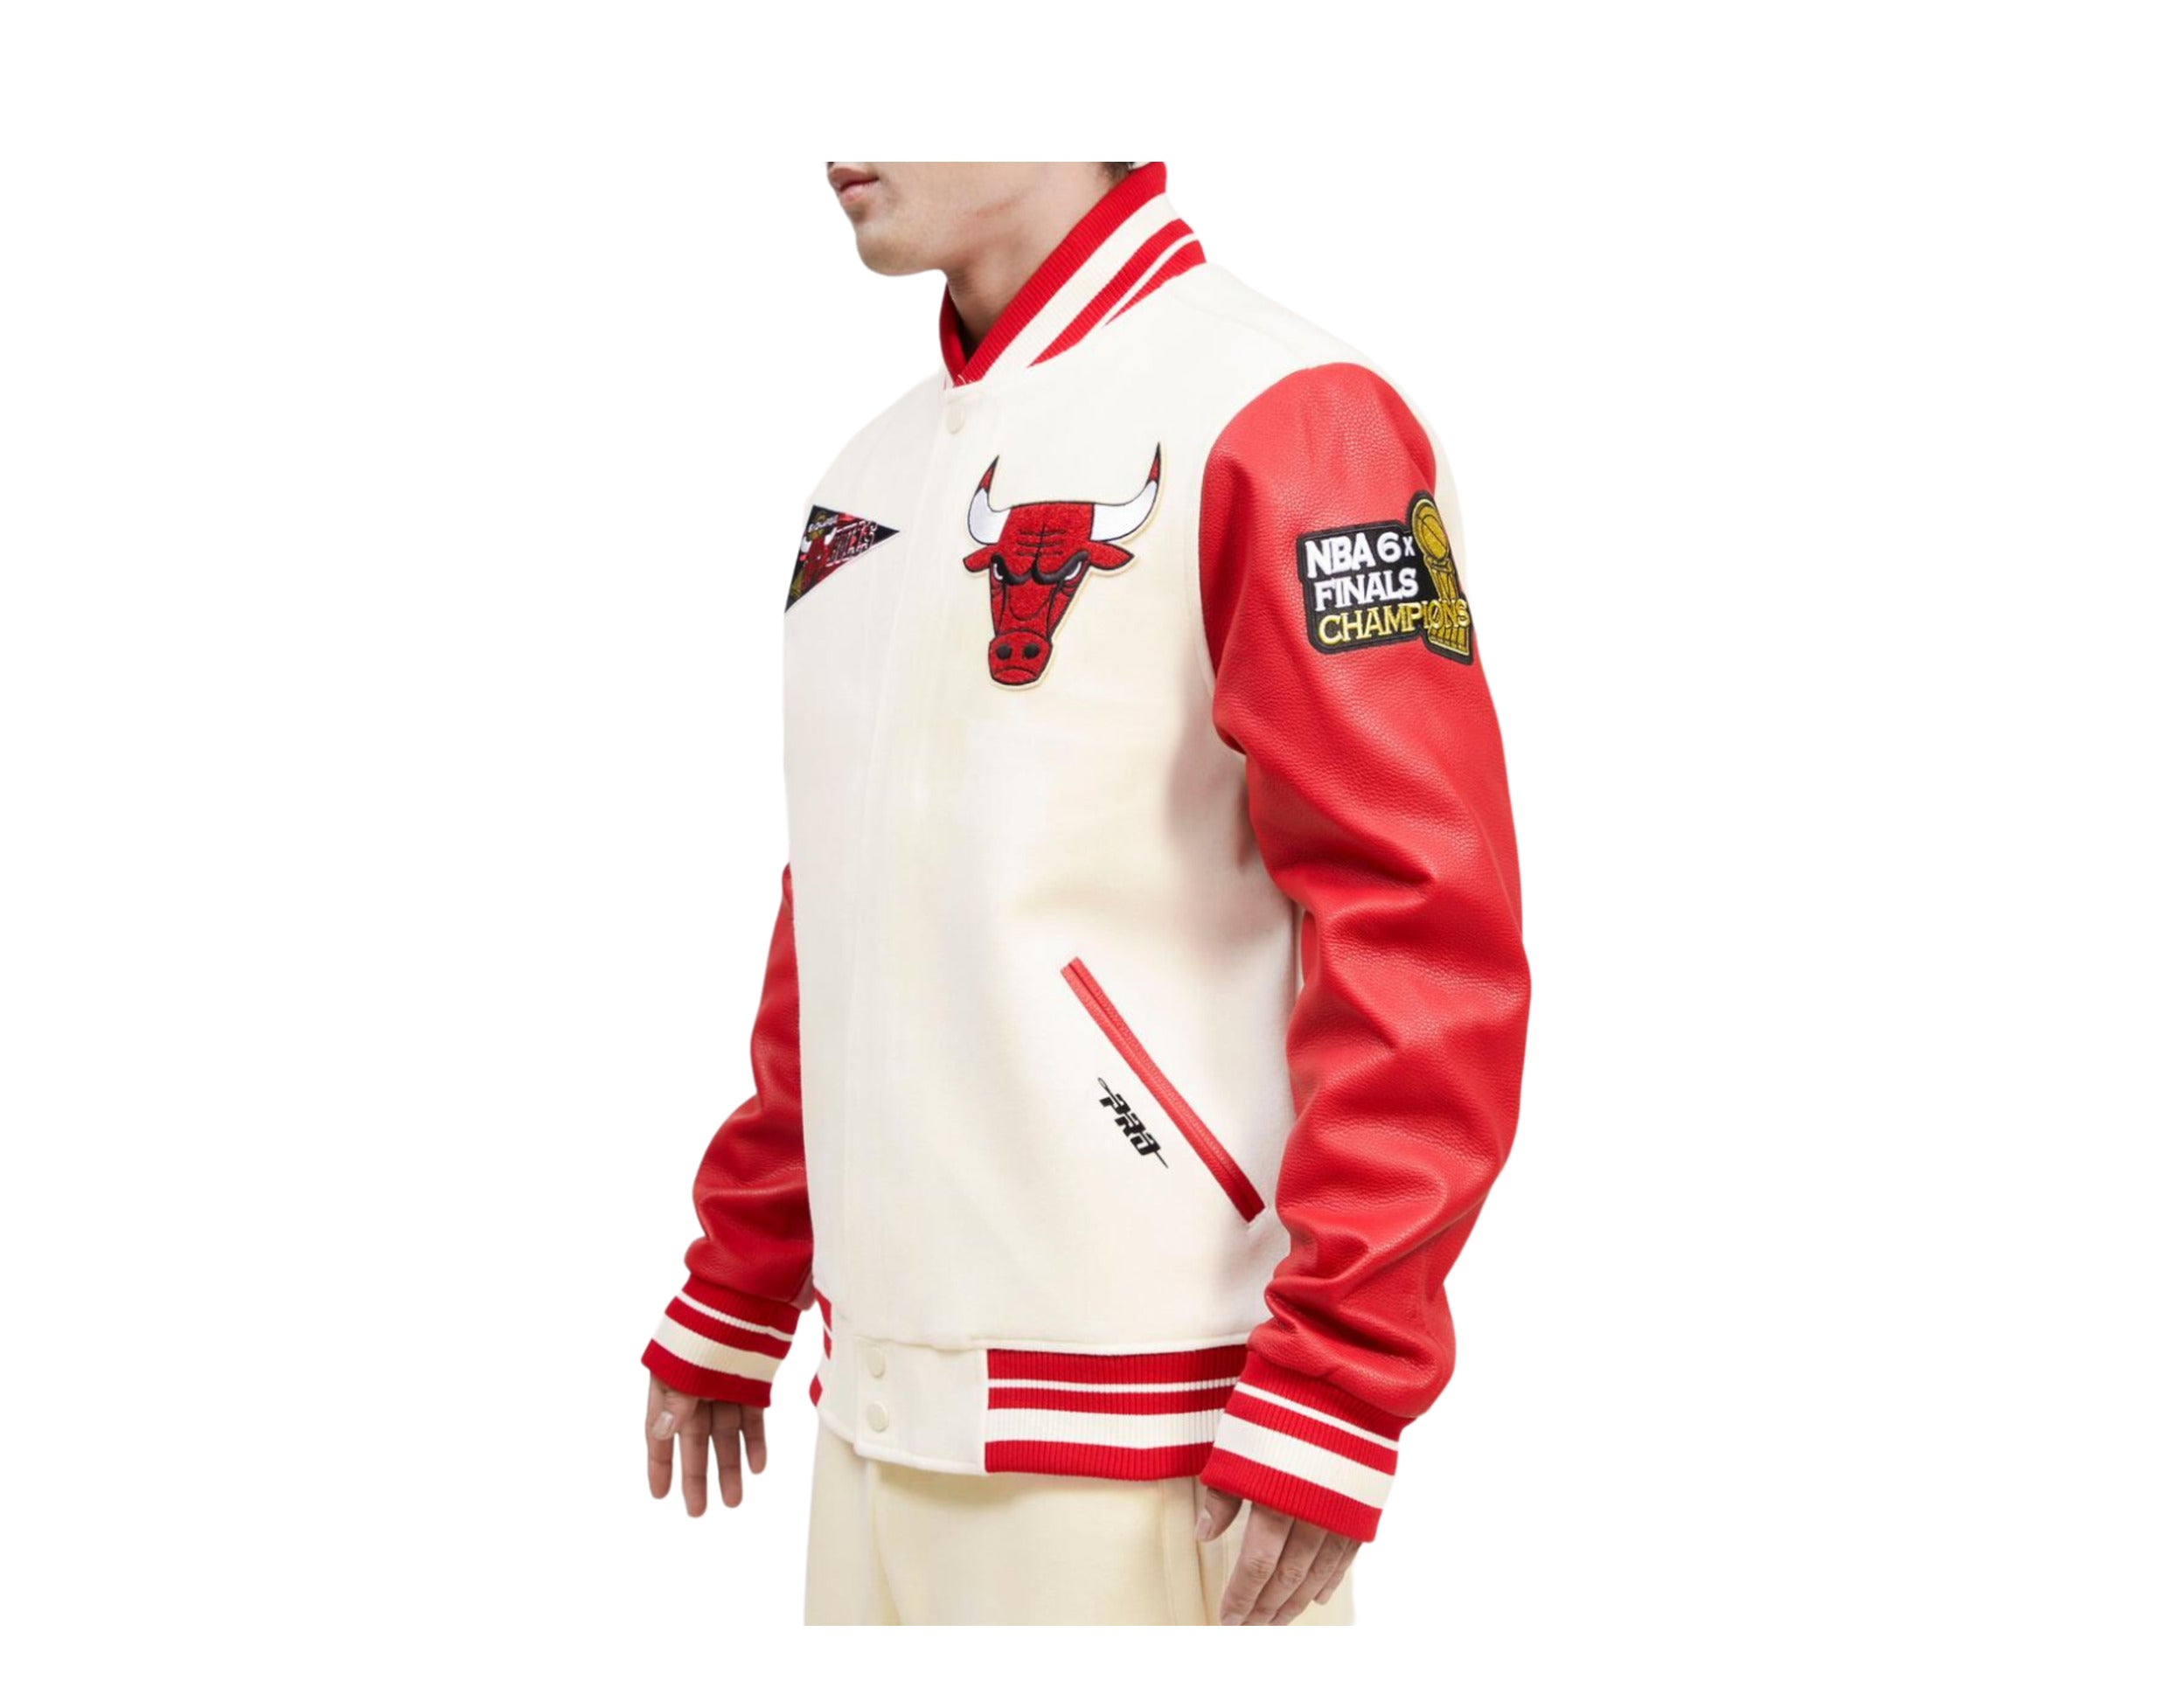 Maker of Jacket NBA Teams Chicago Bulls 6X Champion Finals Varsity Jacket